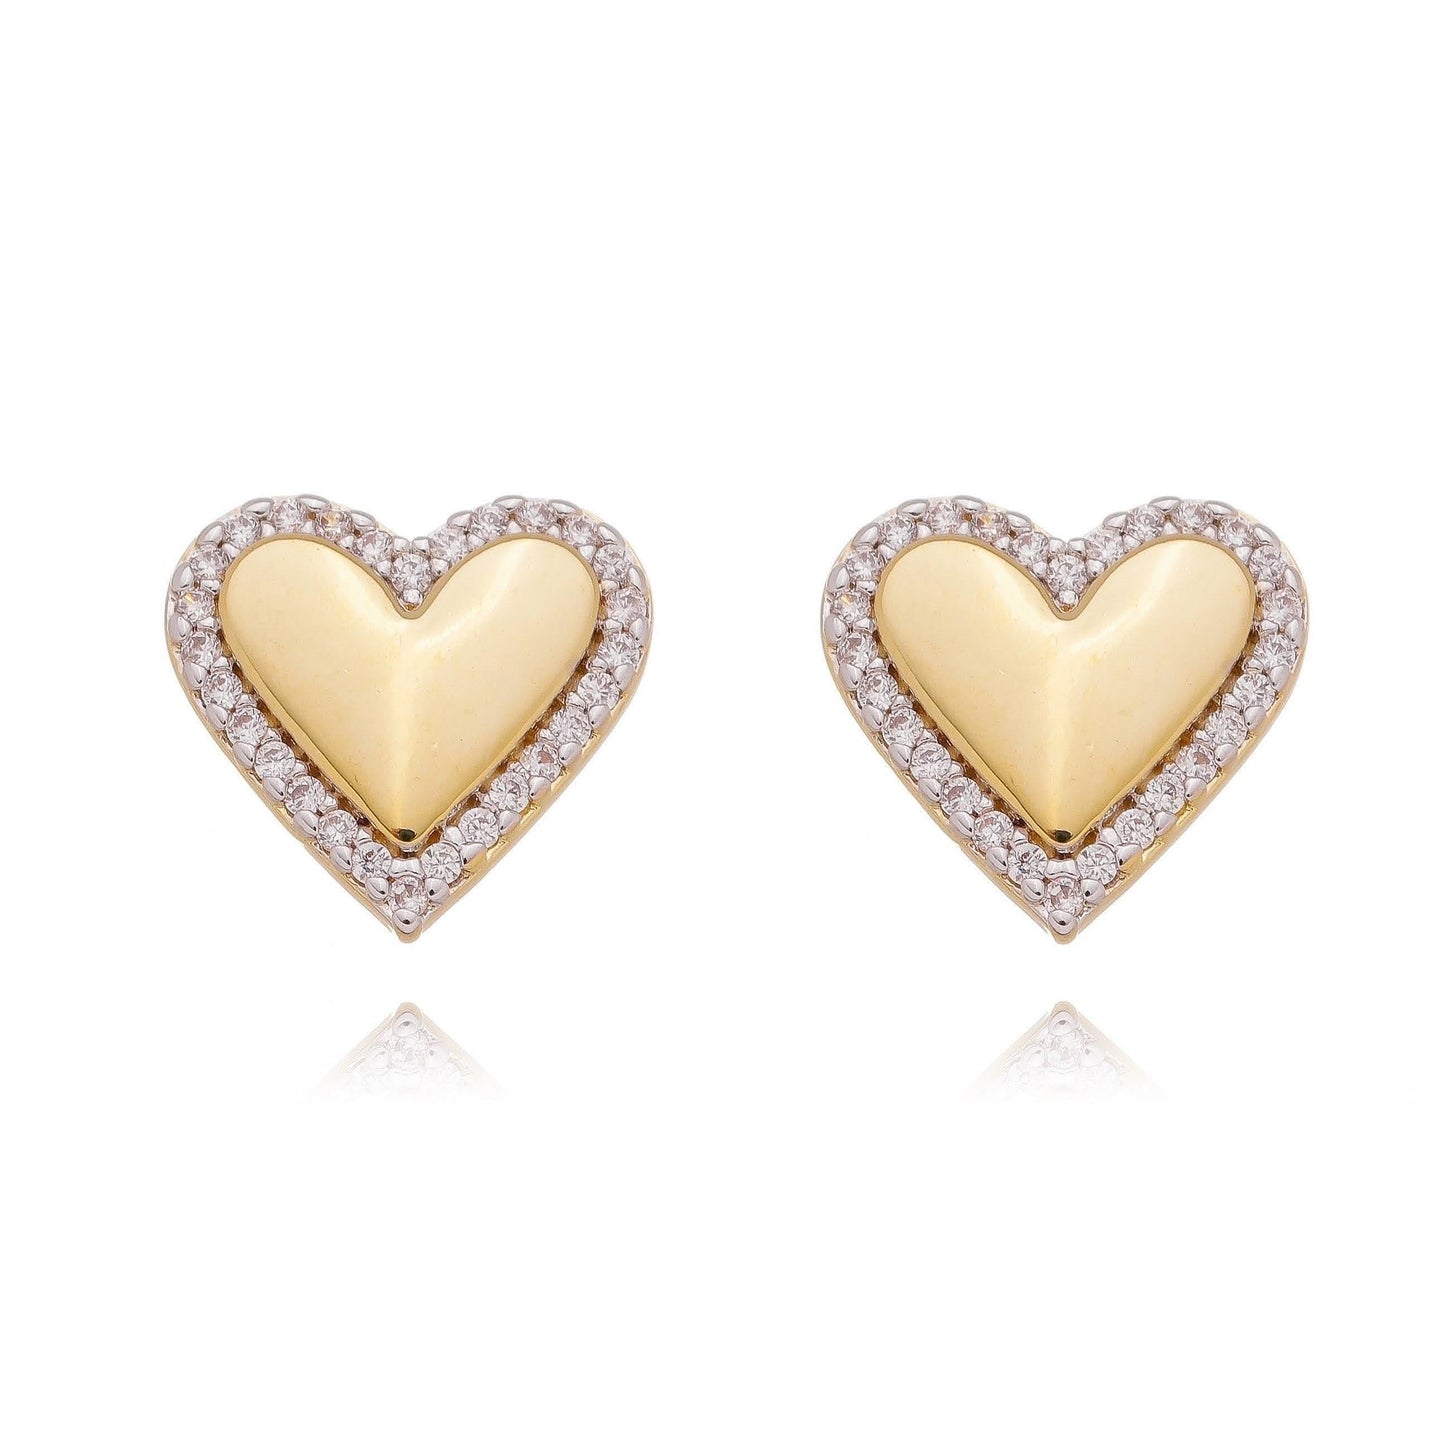 GoldFi 18k Gold Filled Pillow Heart Stud Earrings Cubic Zirconia Stones Around